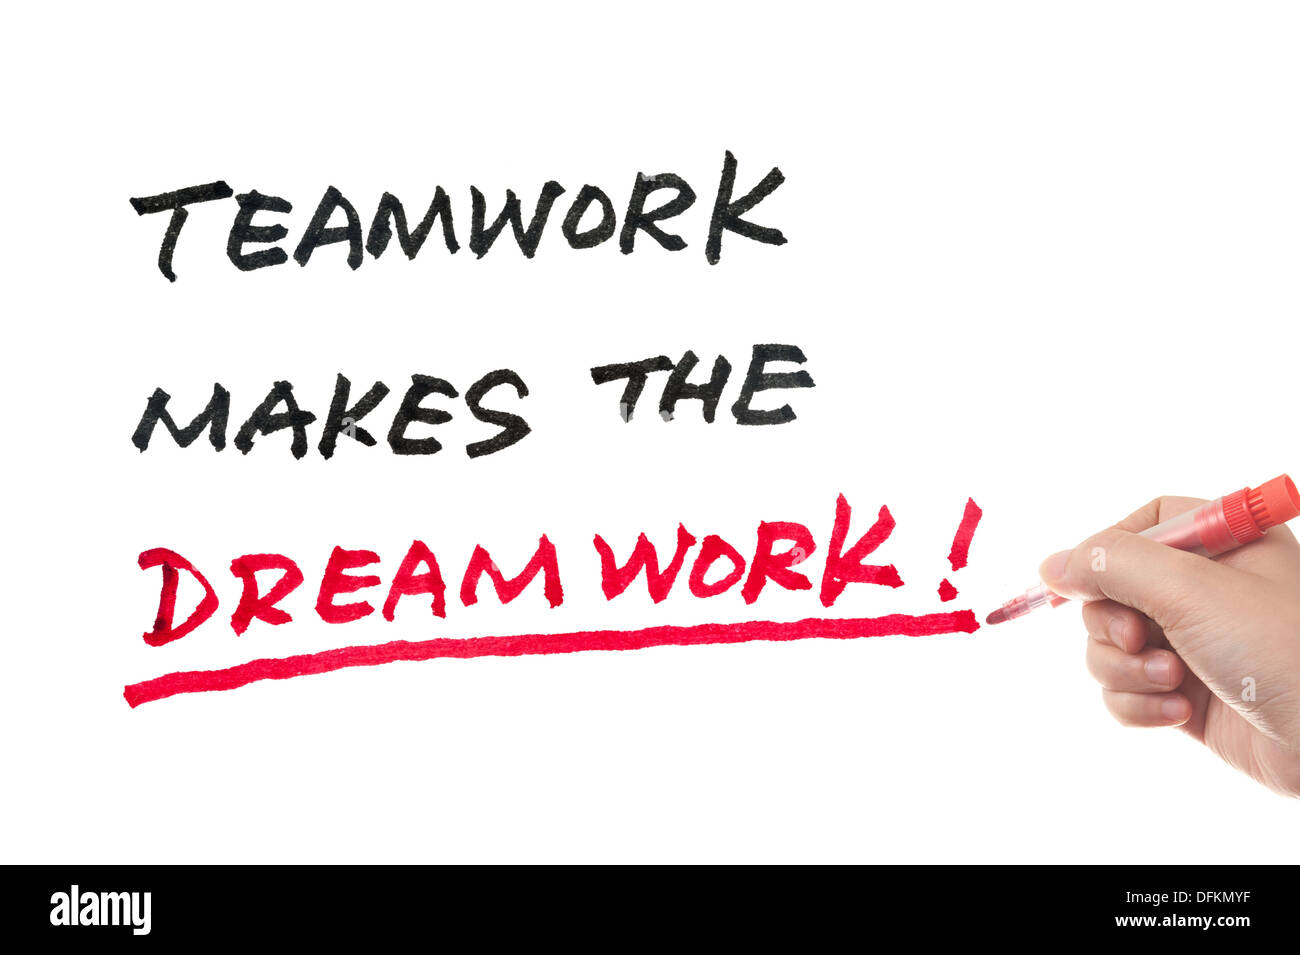 Teamwork makes the dreamwork words written on white board Stock Photo